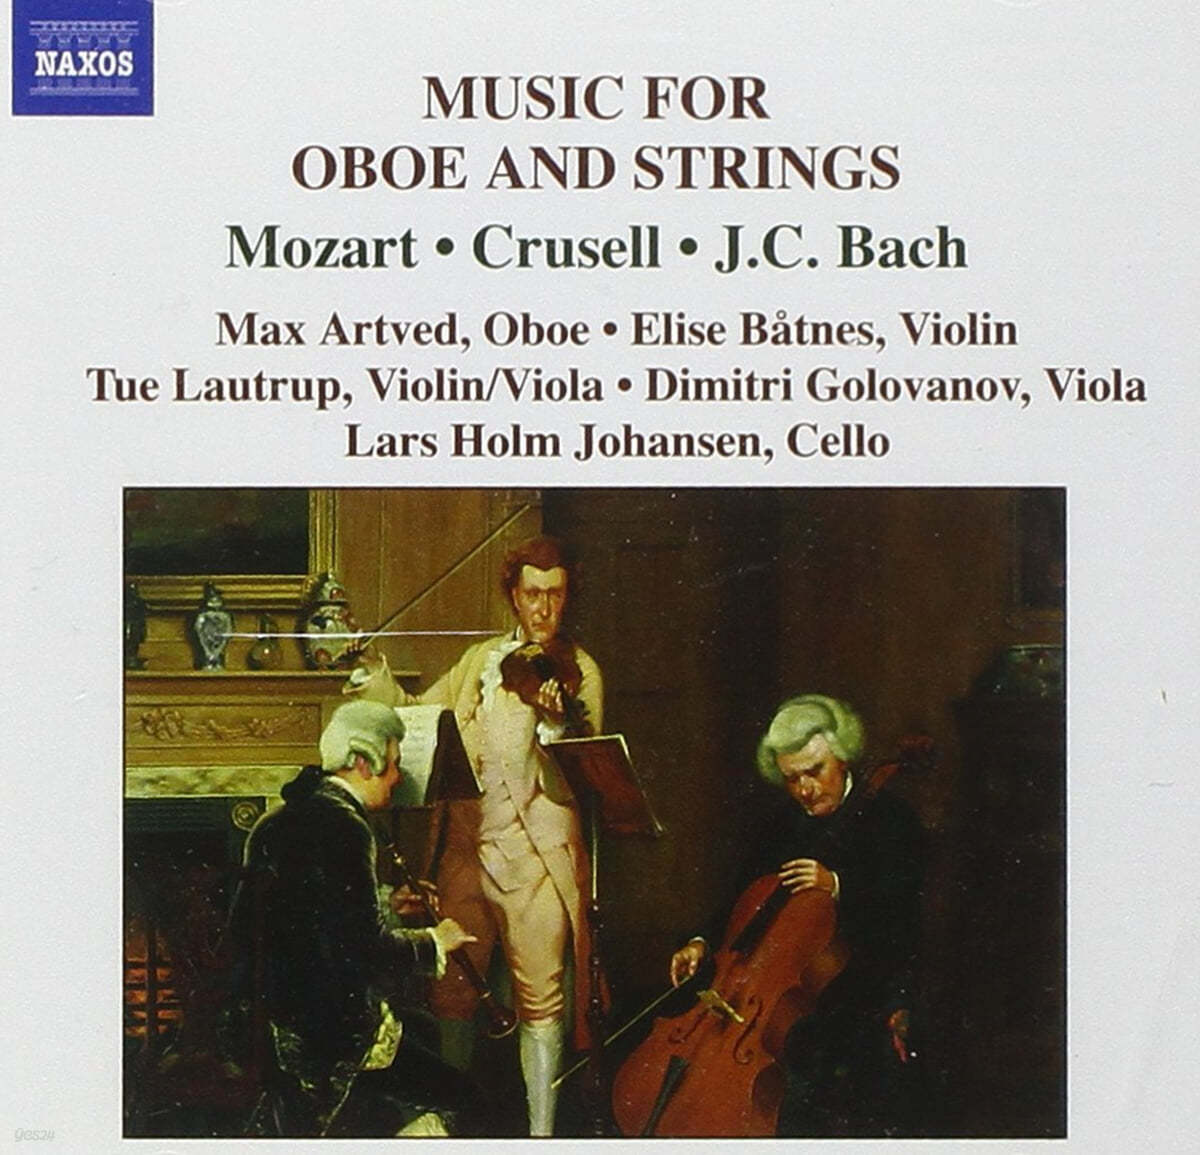 Max Artved 모차르트: 오보에 사중주 F장조, C단조 / 요한 크리스티안 바흐: 오보에 사중주 내림 B장조 (Mozart: Oboe Quartets K.370, K.406 / J.C.Bach: Oboe Quartet B60) 